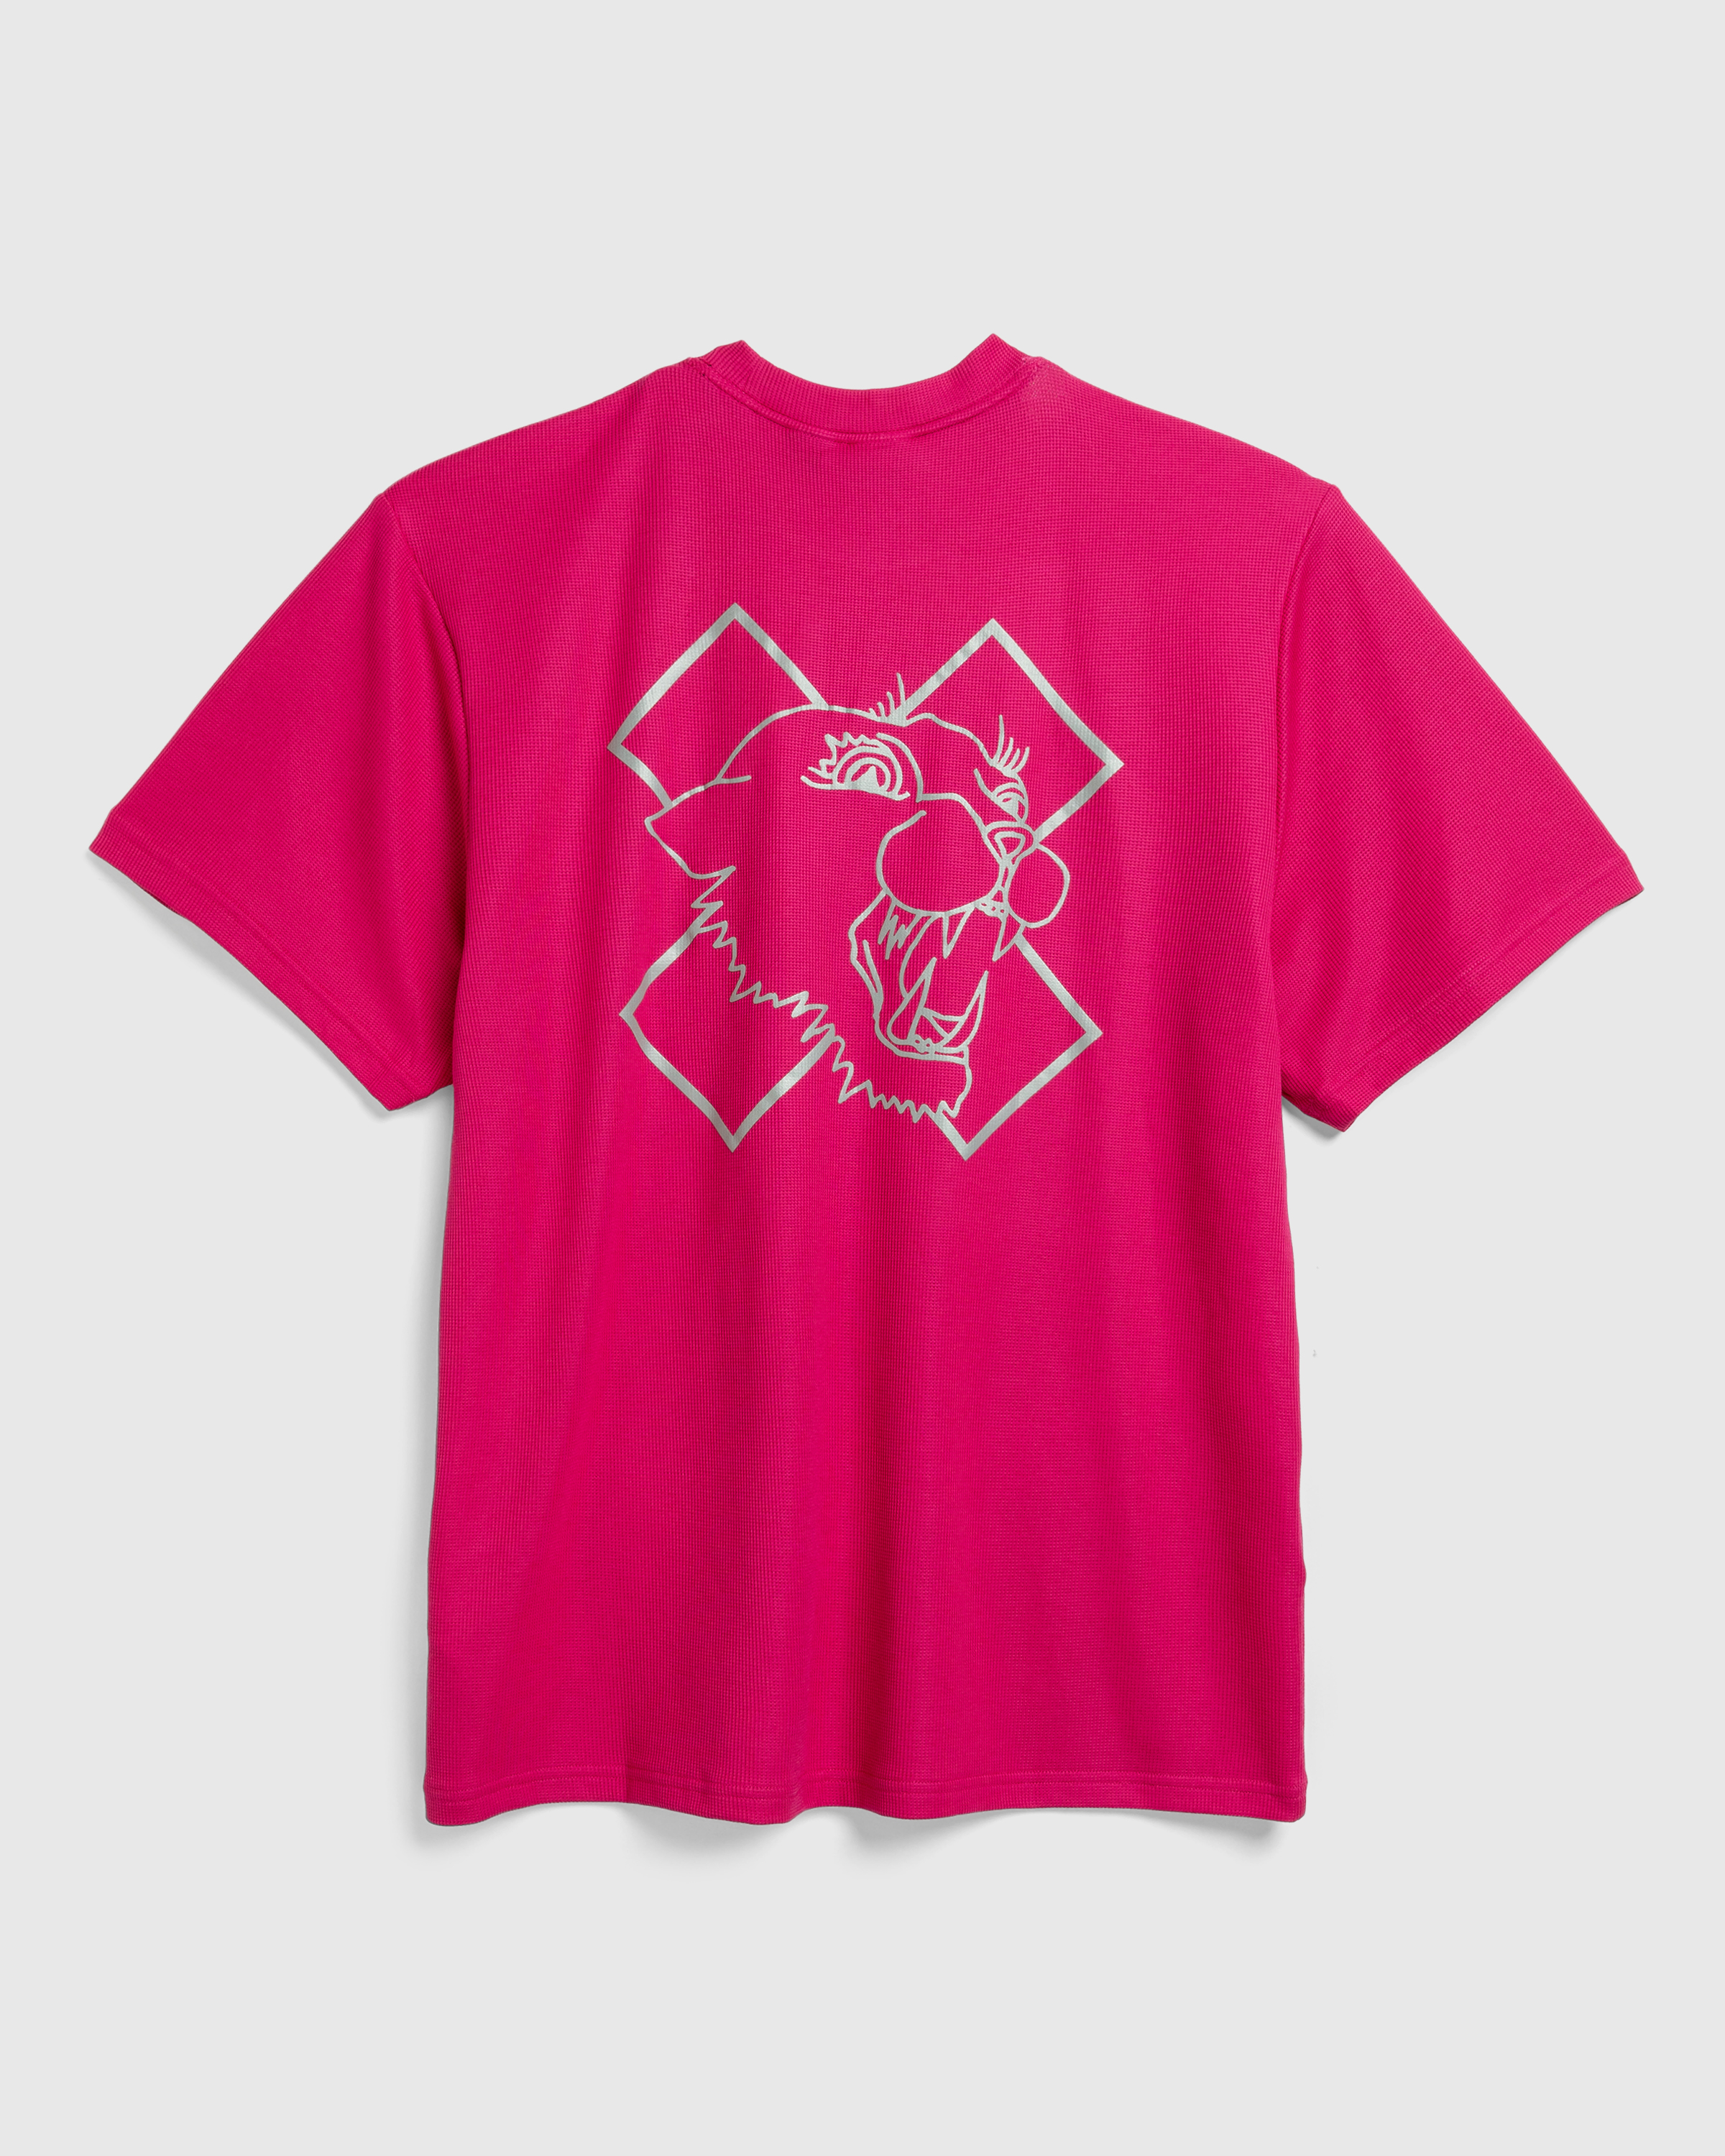 Nike x Patta – Running Team T-Shirt Fireberry - T-Shirts - Red - Image 6